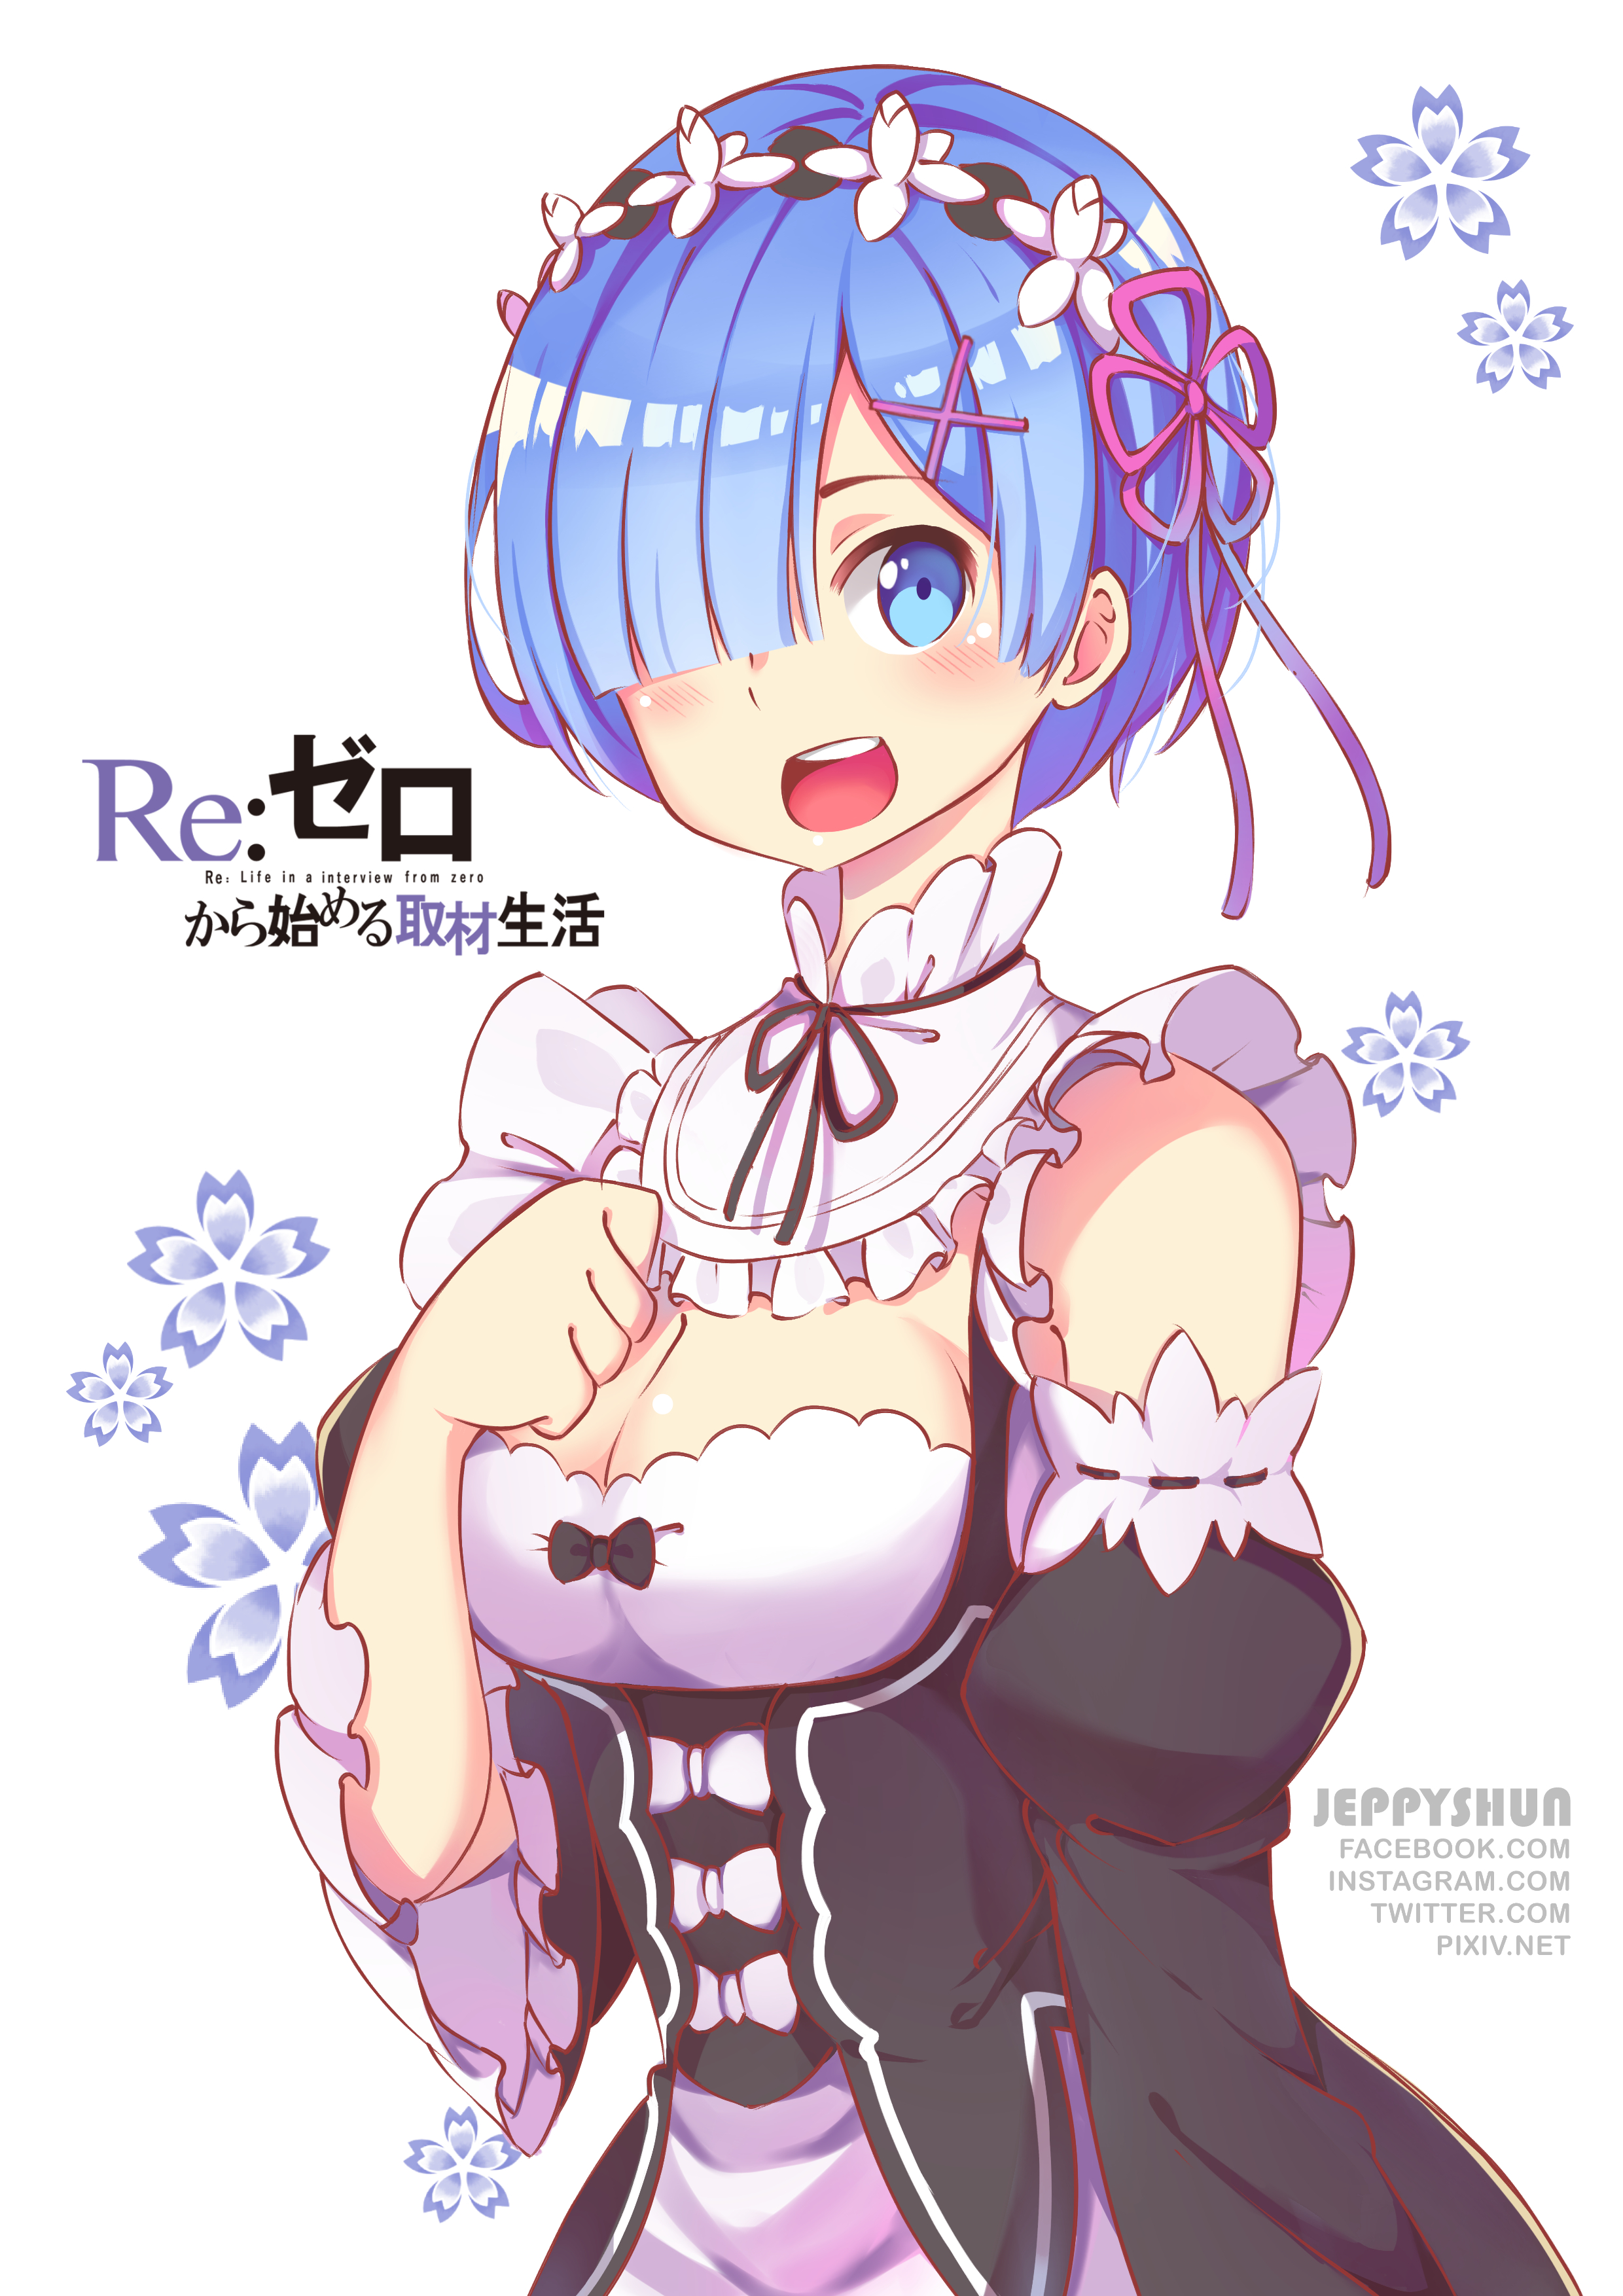 Anime 2480x3508 anime anime girls Re:Zero Kara Hajimeru Isekai Seikatsu Rem (Re:Zero) blue hair maid maid outfit